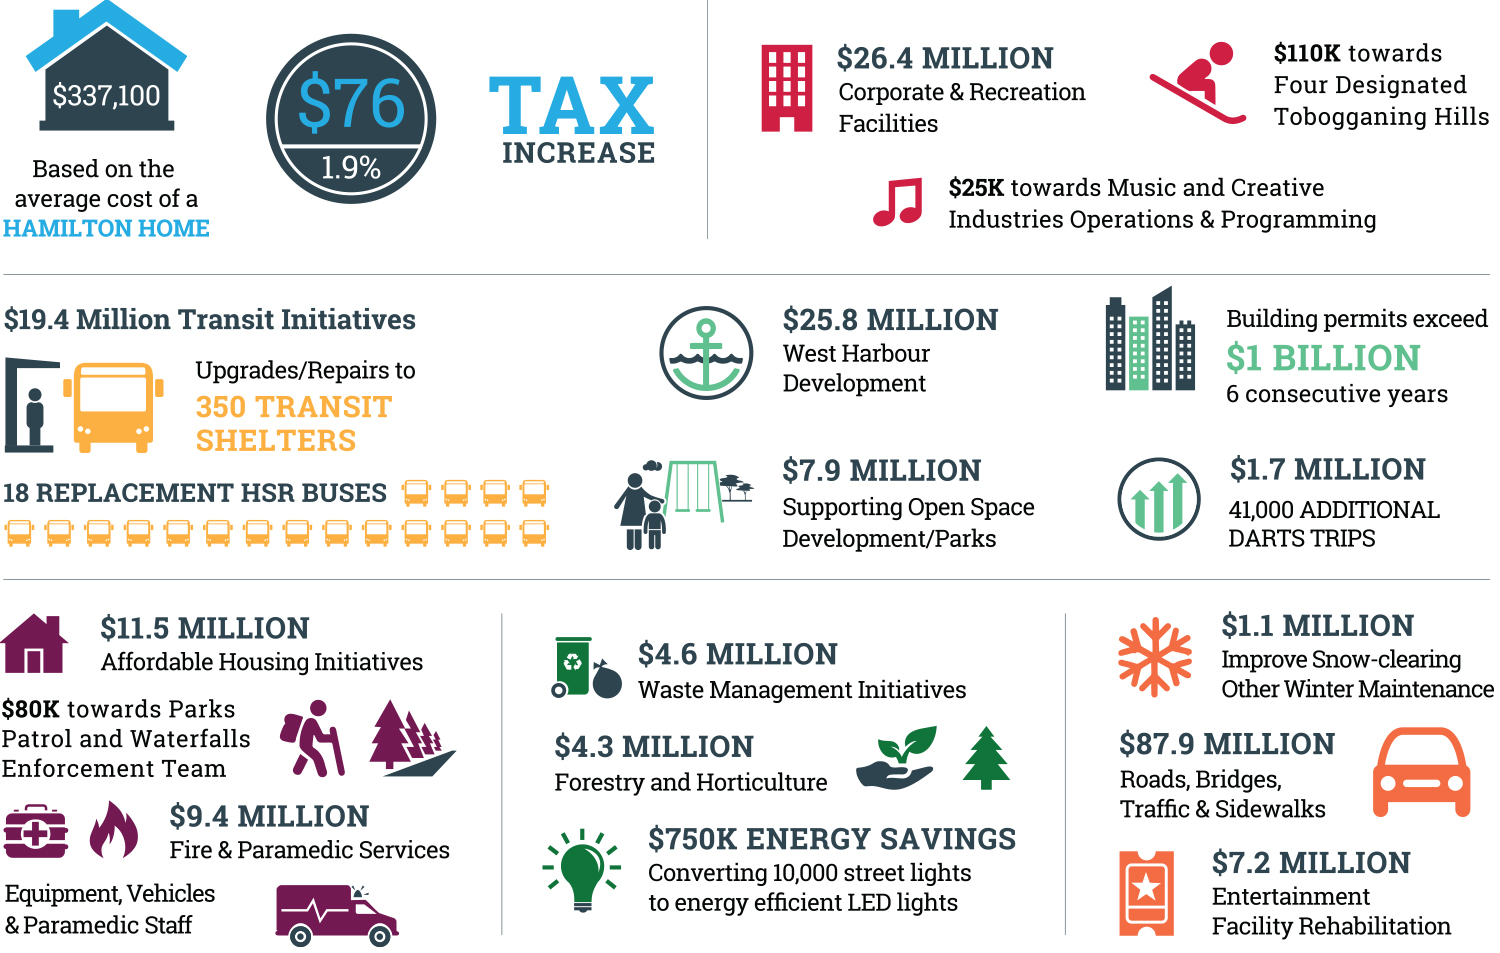 2018 budget highlights infographic, full description below